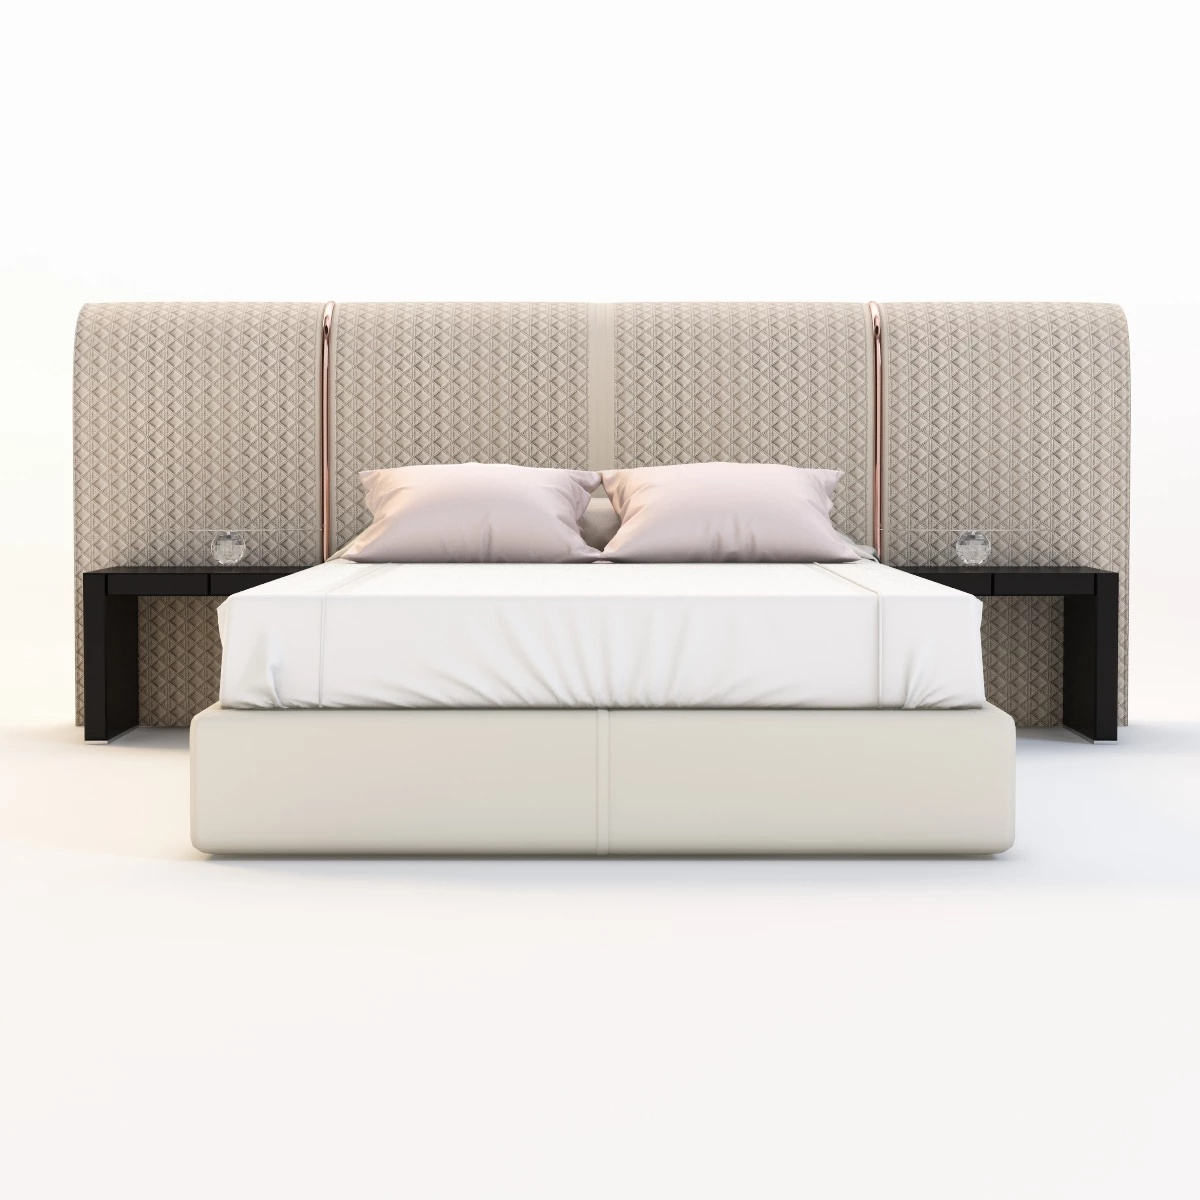 Collection of Five Luxury Platform Beds 3D Model_01